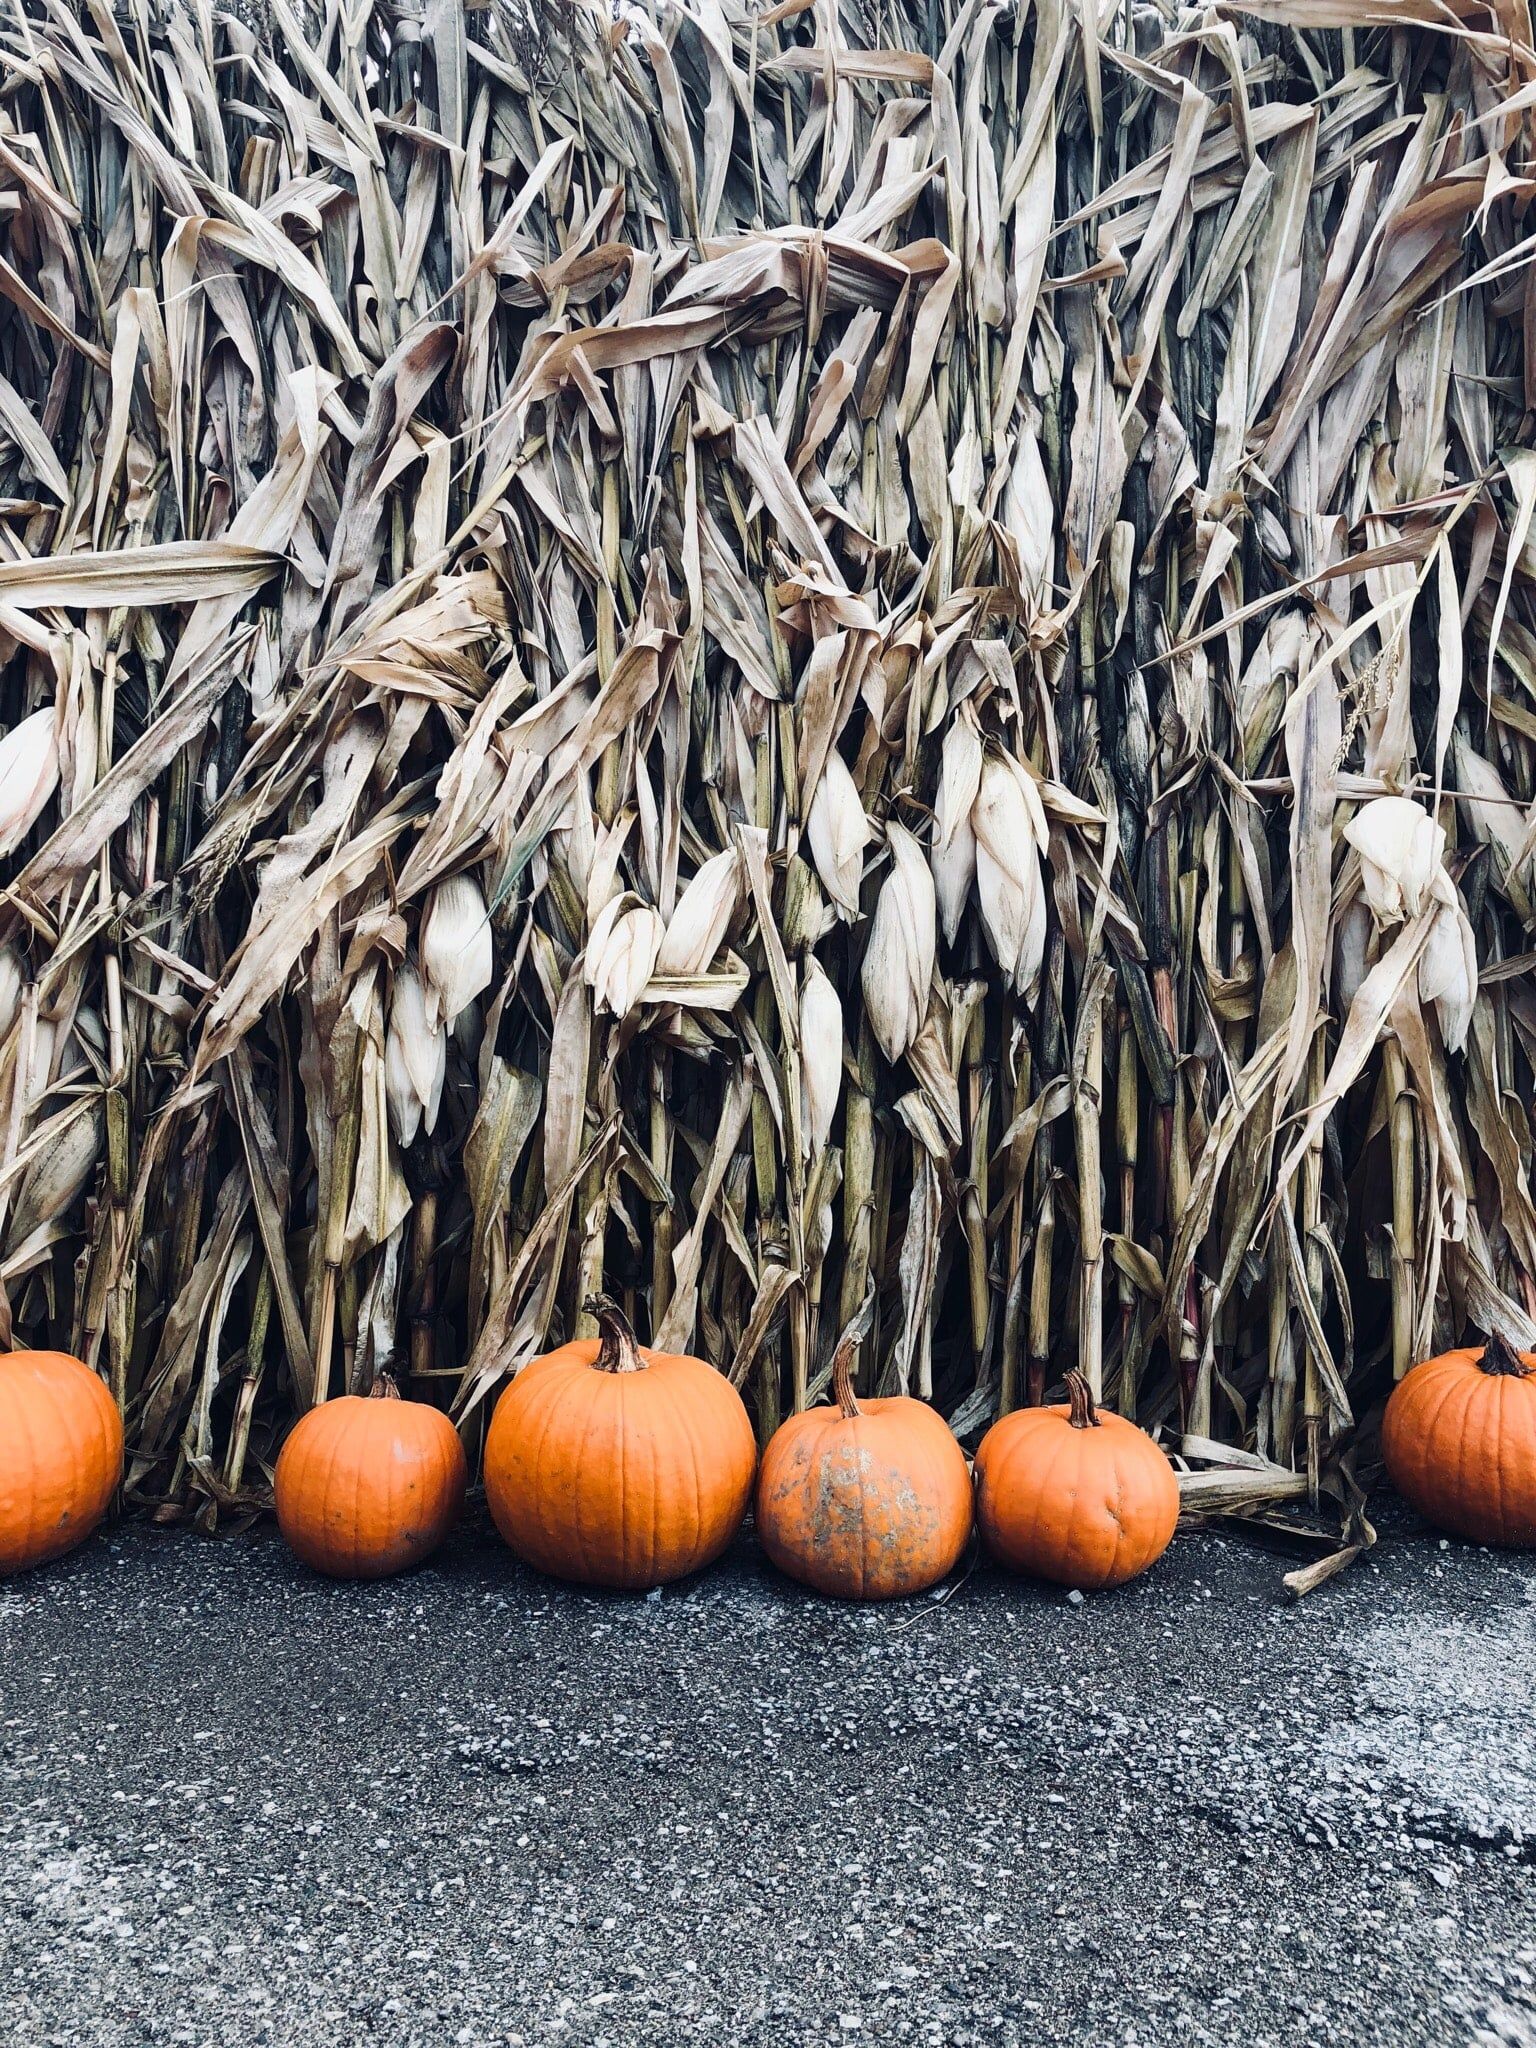 A row of pumpkins sit in front of a wall of corn stalks. - Cute fall, pumpkin